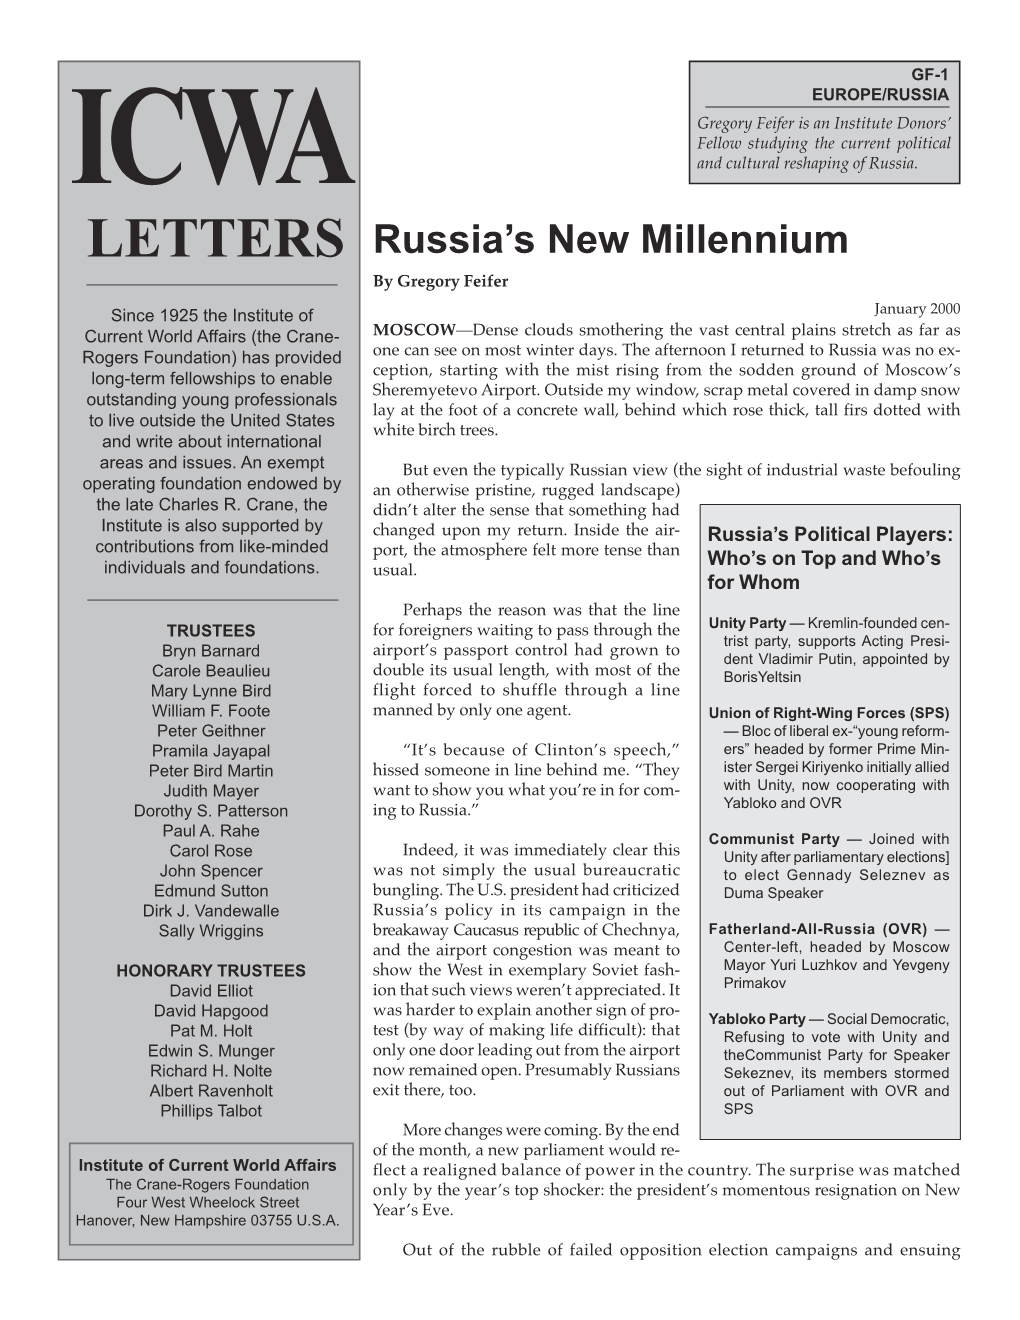 Russia's New Mellennium